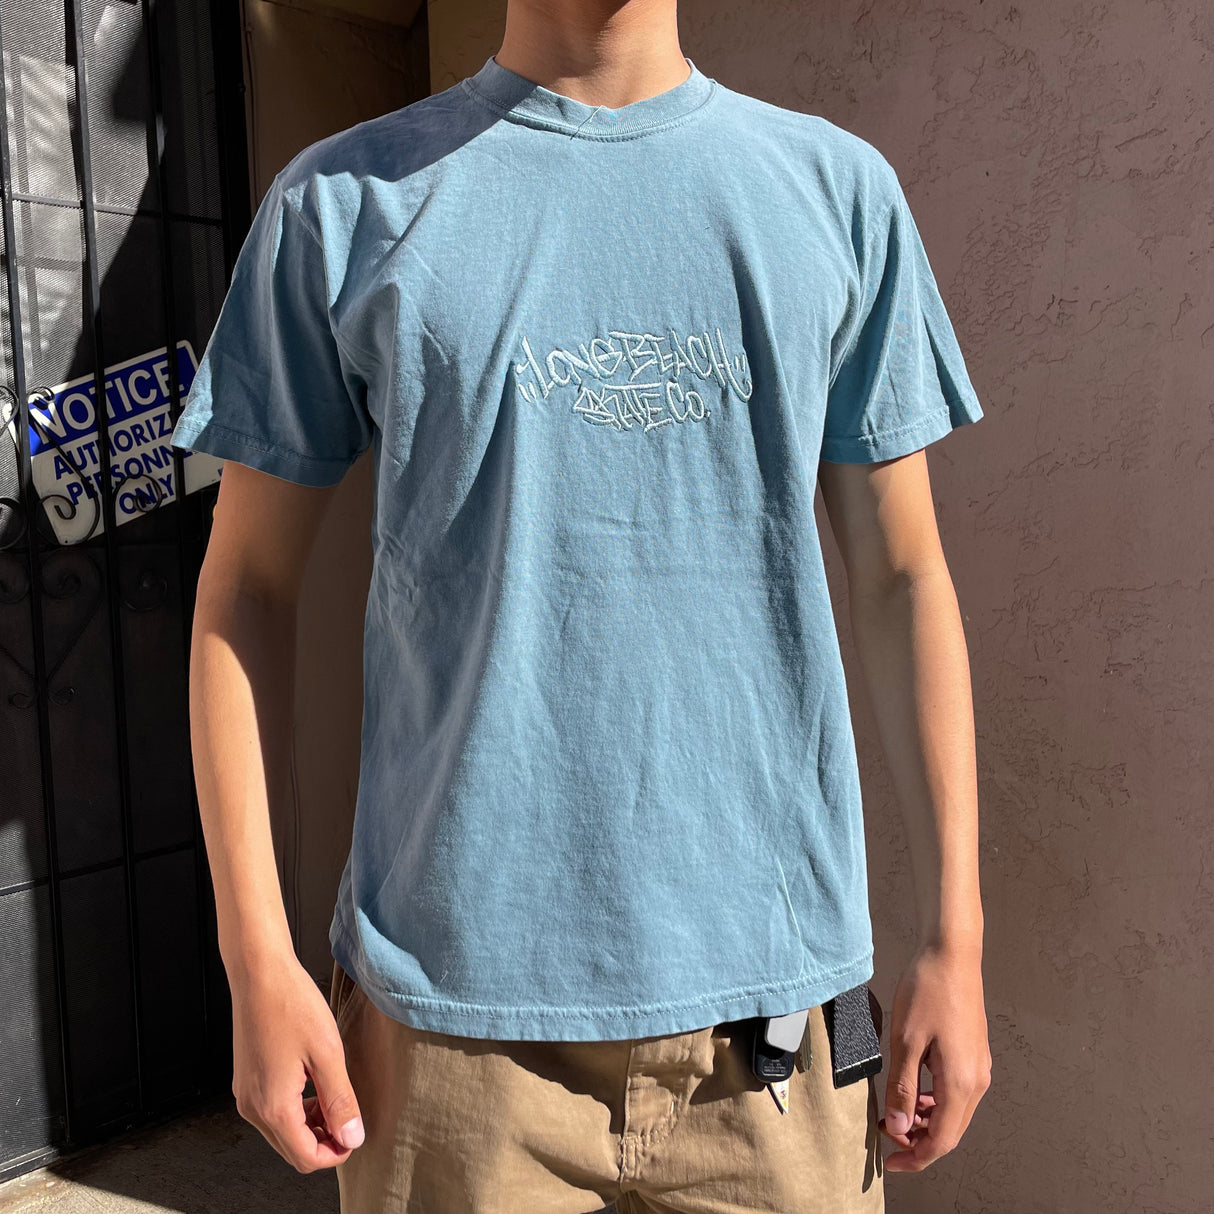 Long Beach Skate Co. Graffiti Signature Ice Blue S/s Shirt